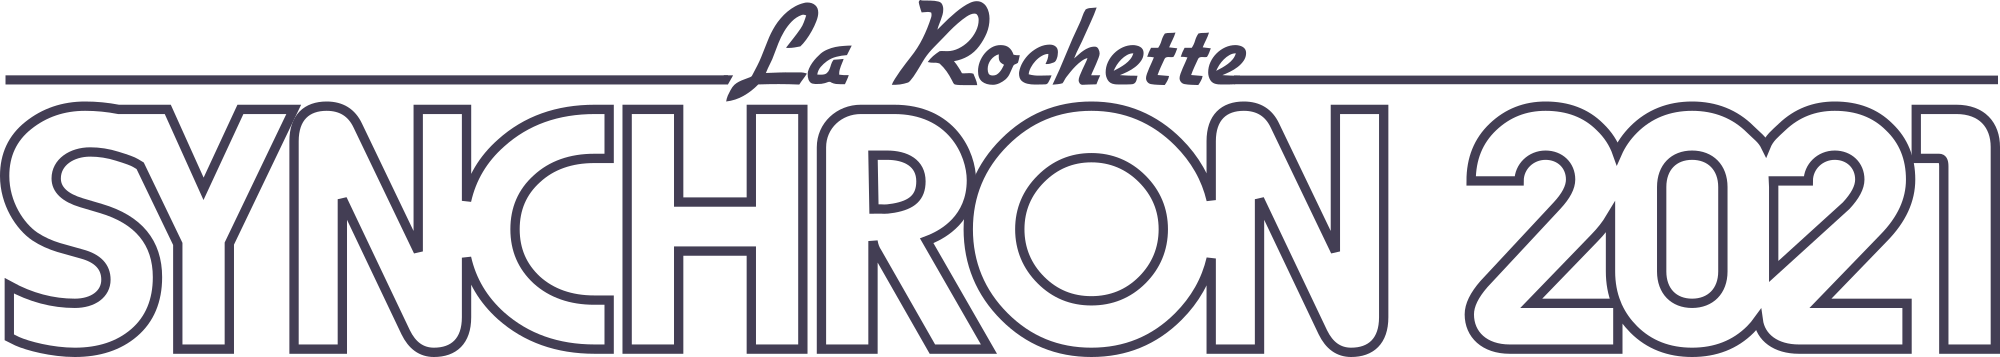 Synchron 2021 logo